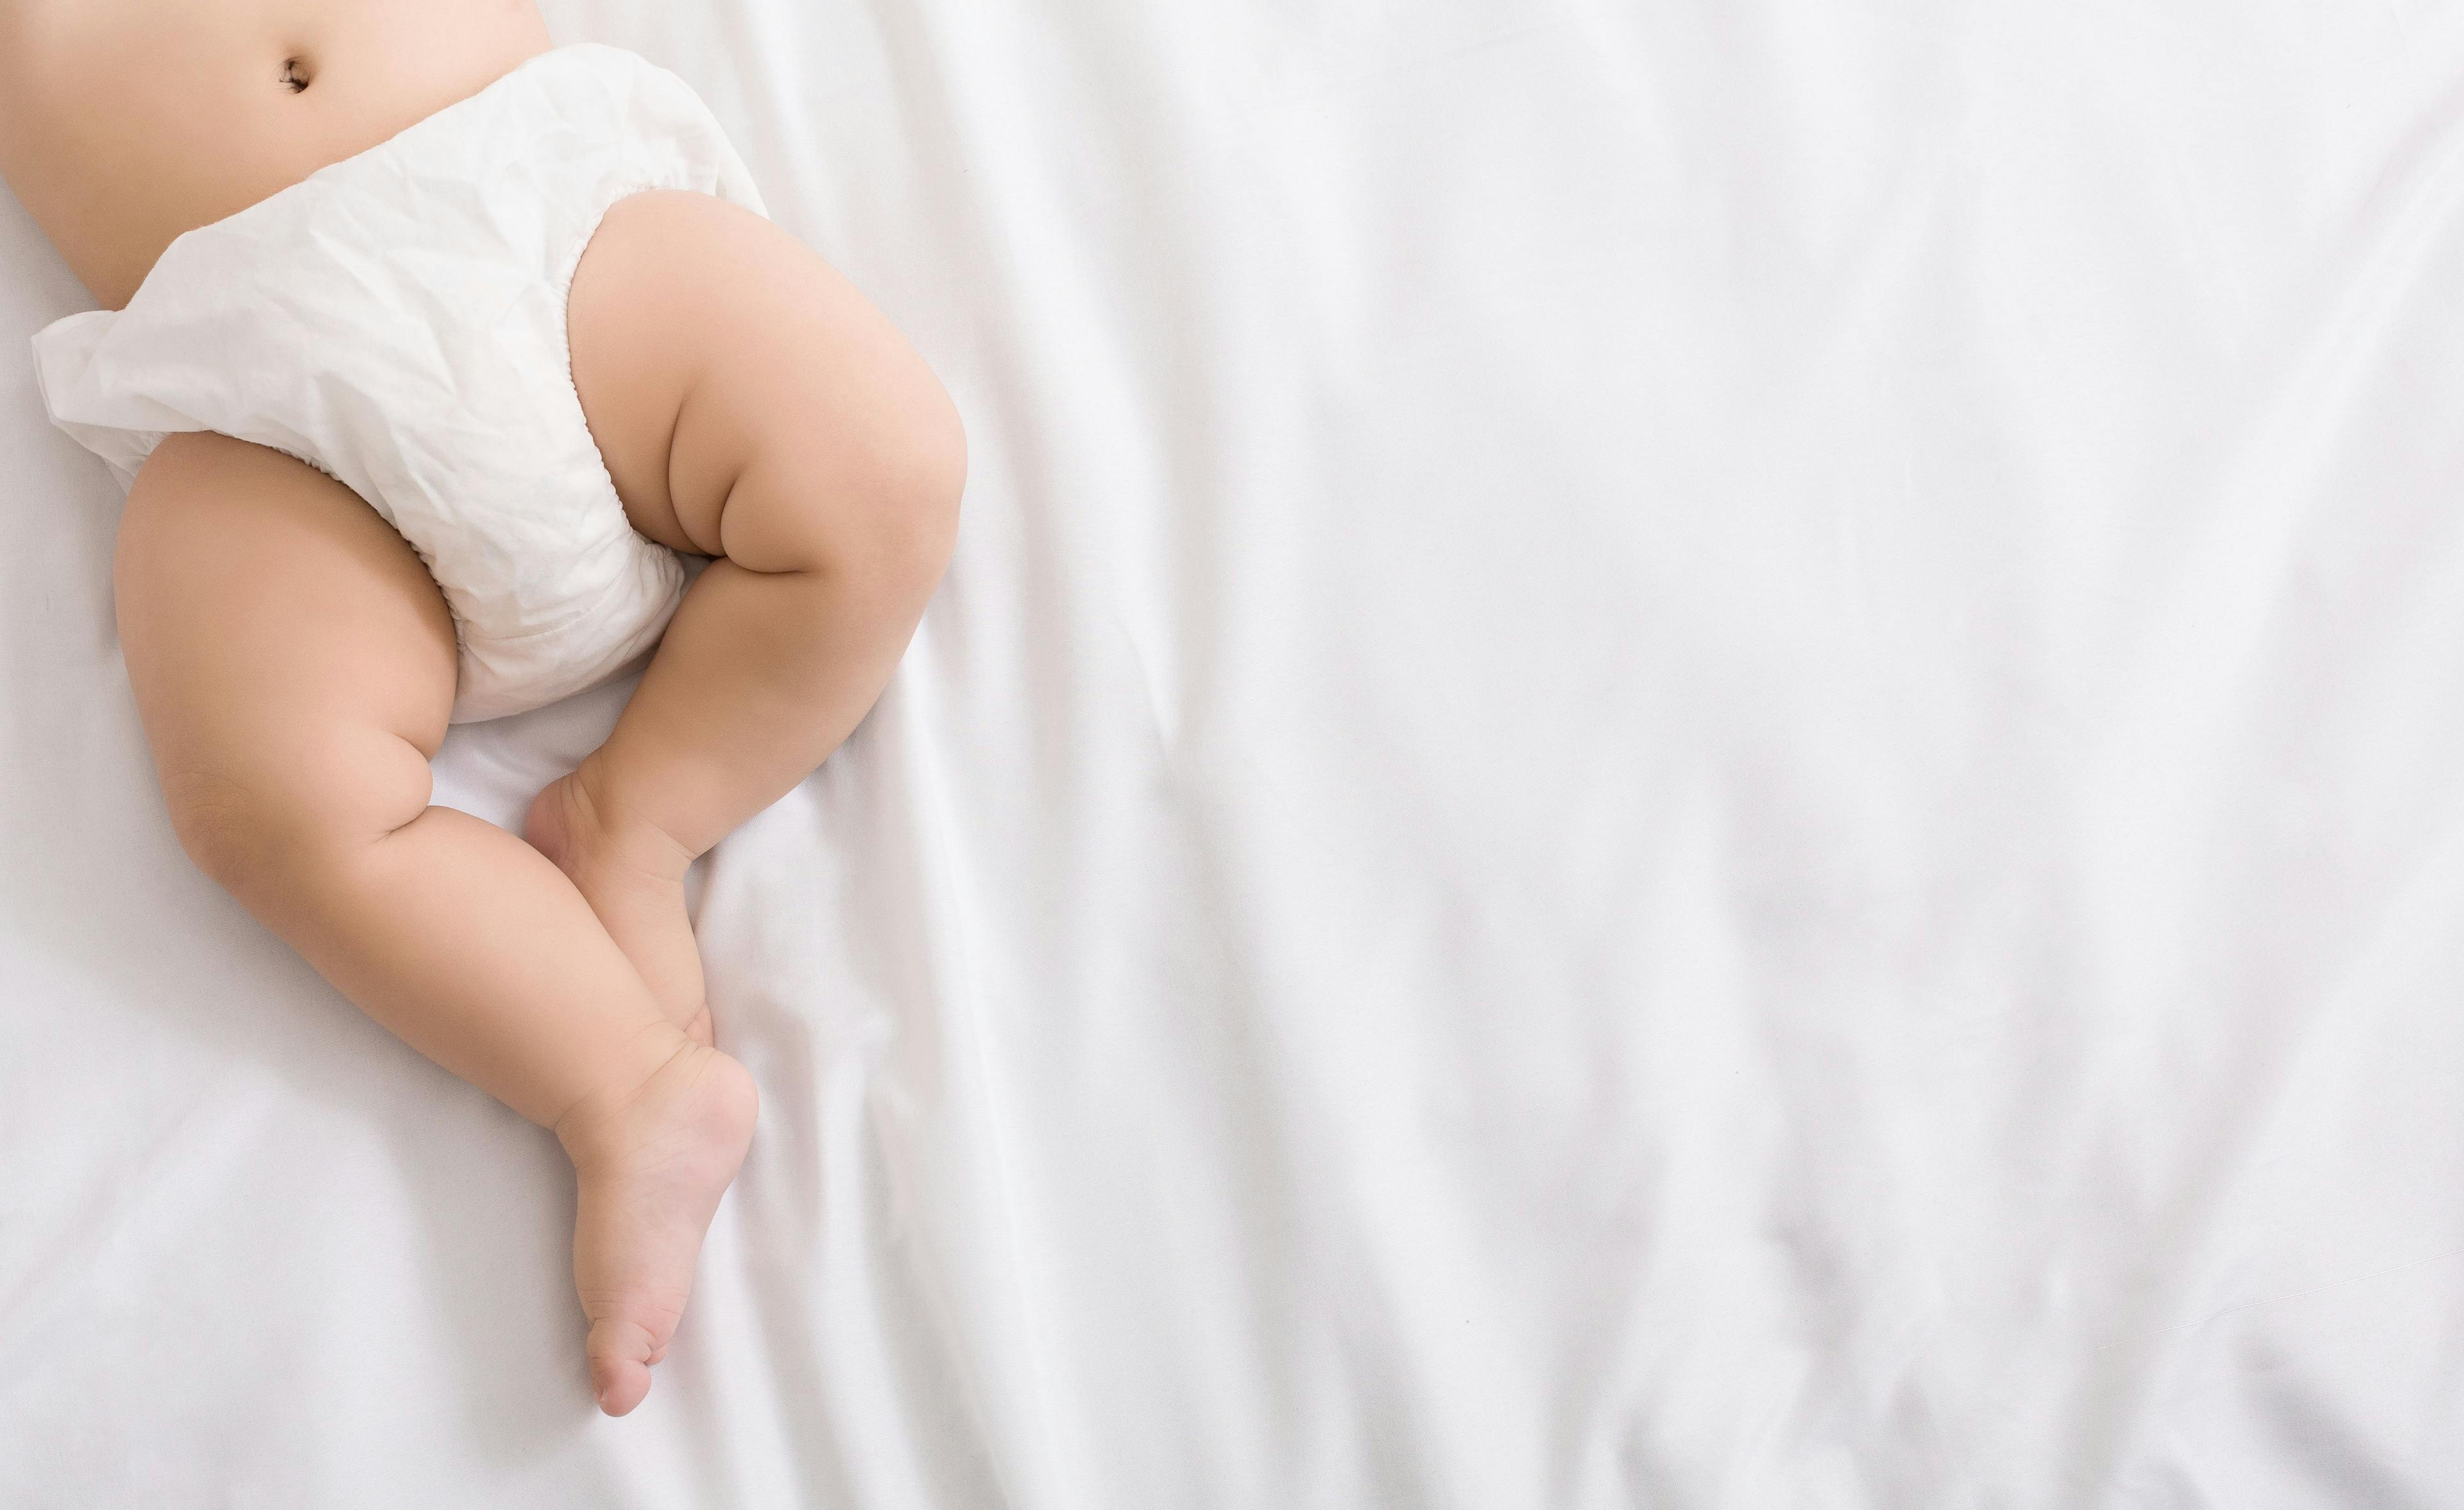 Baby legs and bottom in diaper on bed | Image Credit: © Prostock-studio - stock.adobe.com